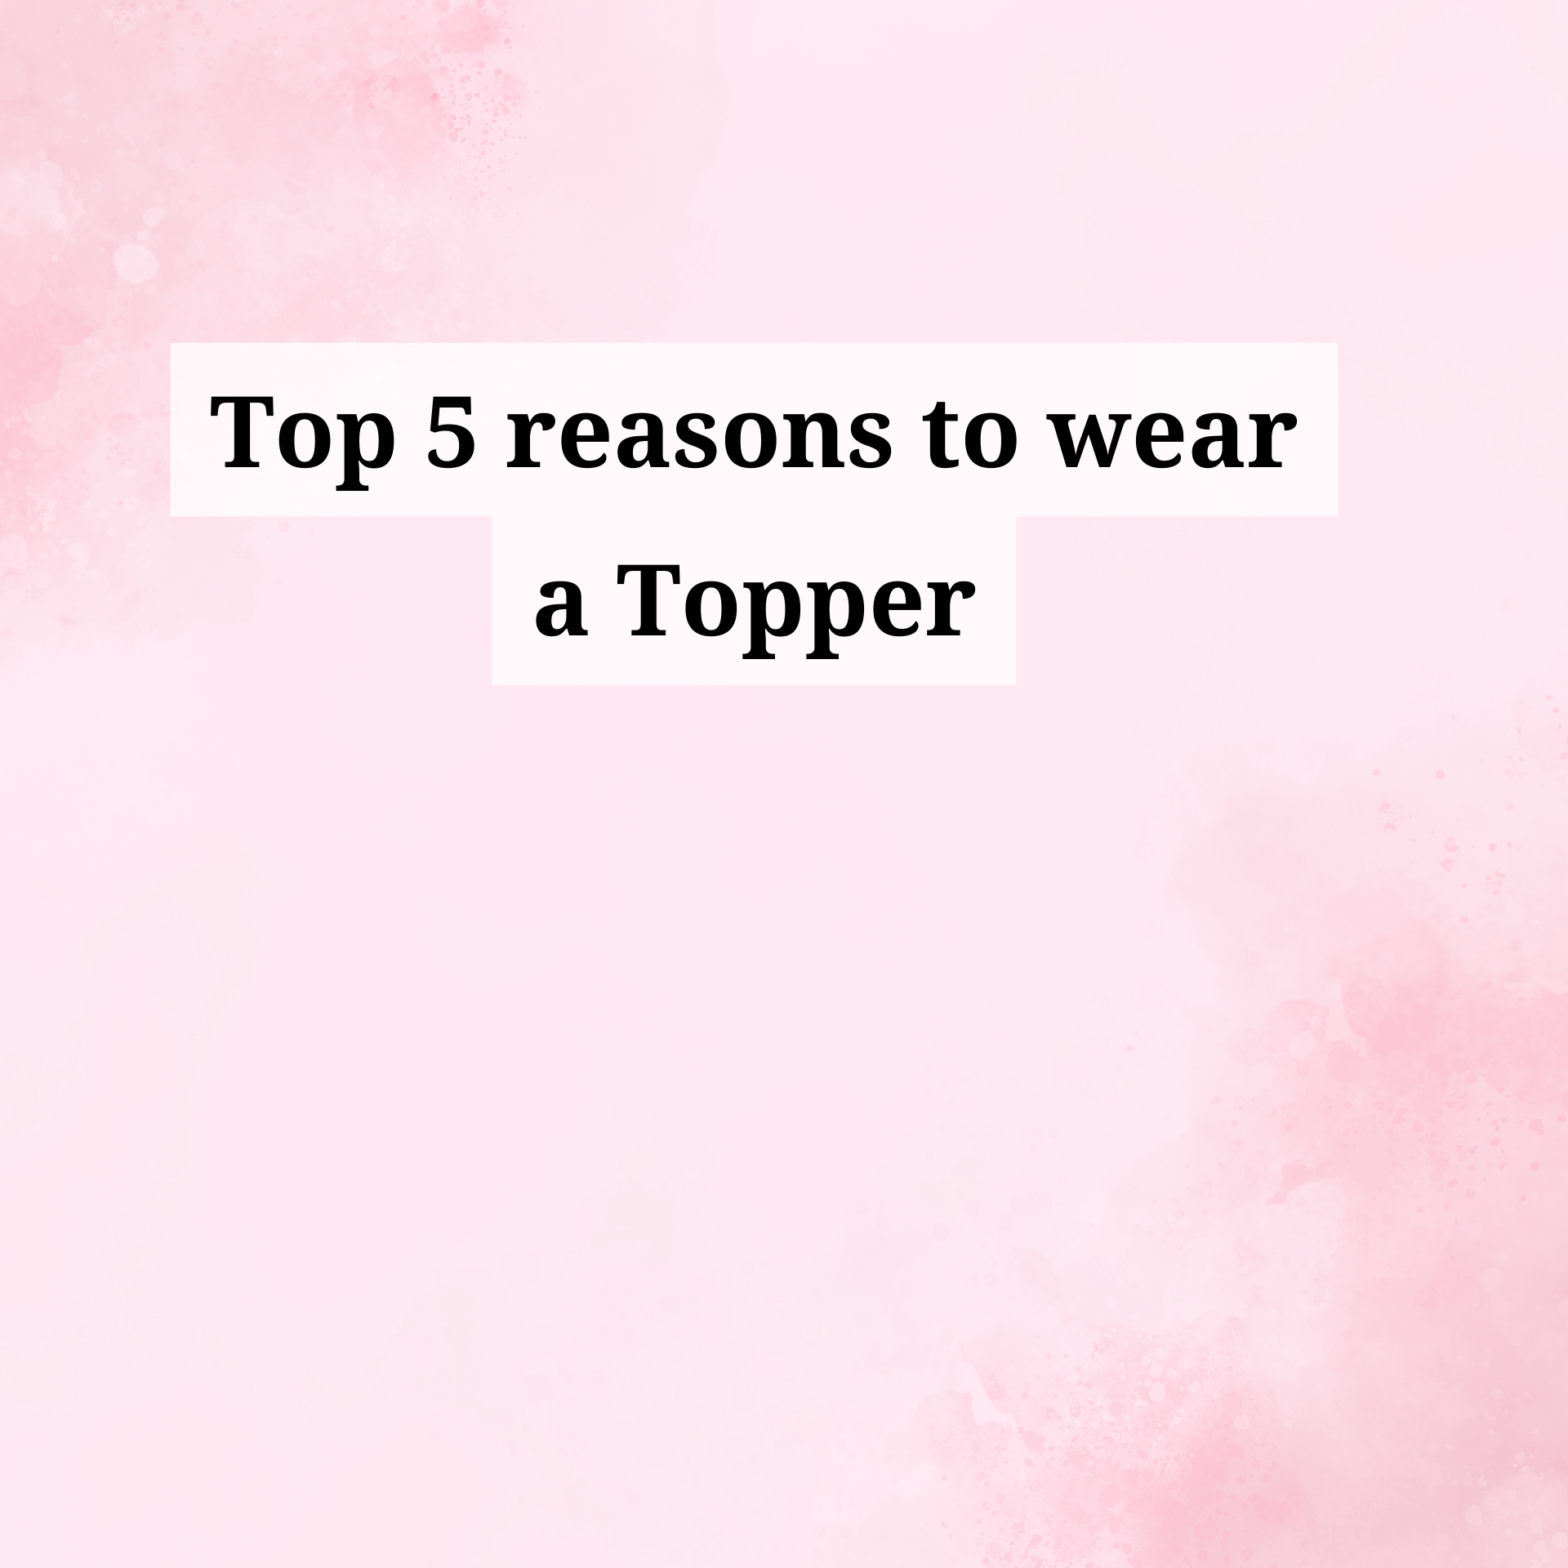 Why wear a topper?